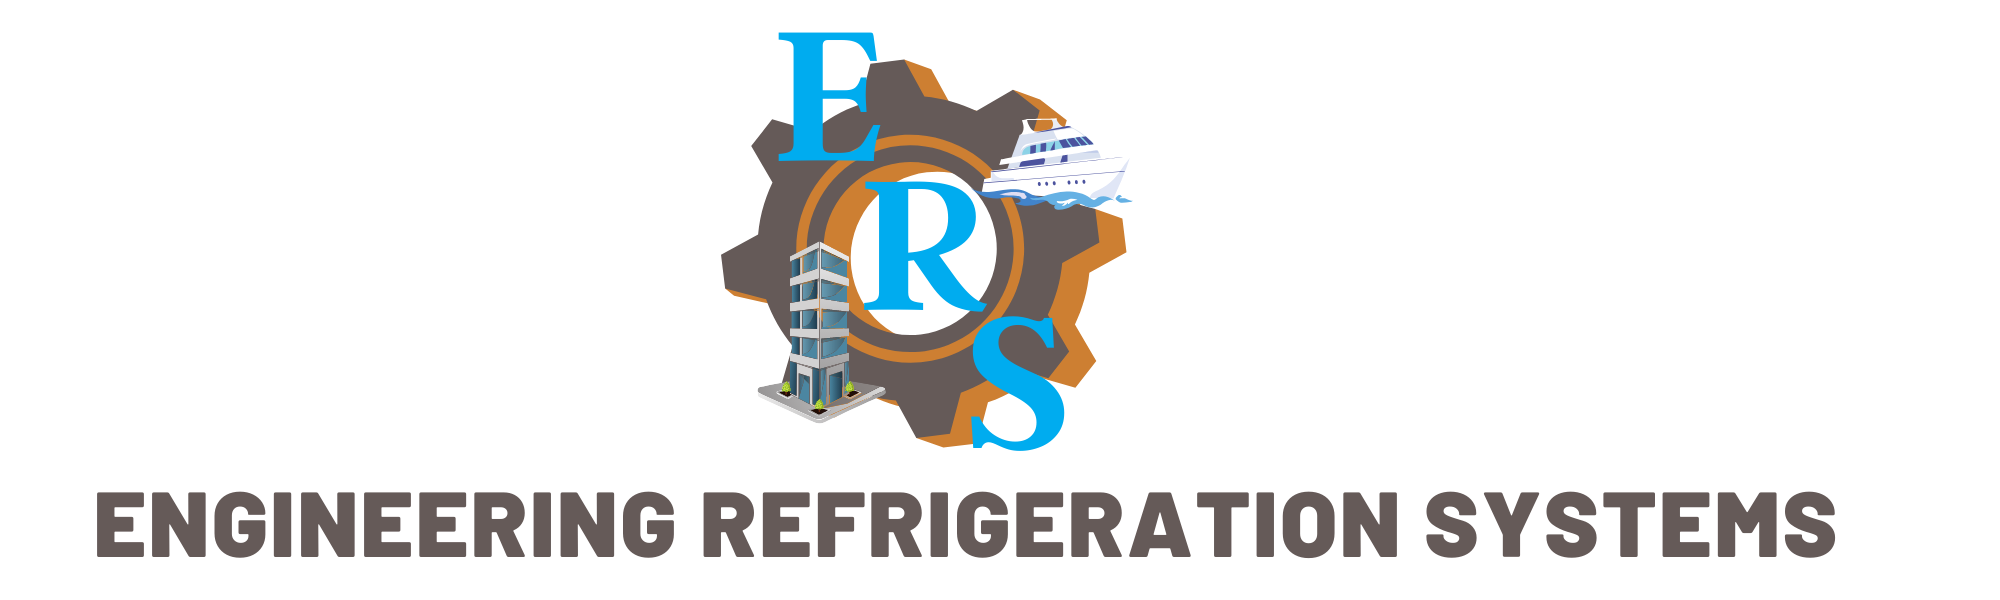 engineering-refrigeration-systems